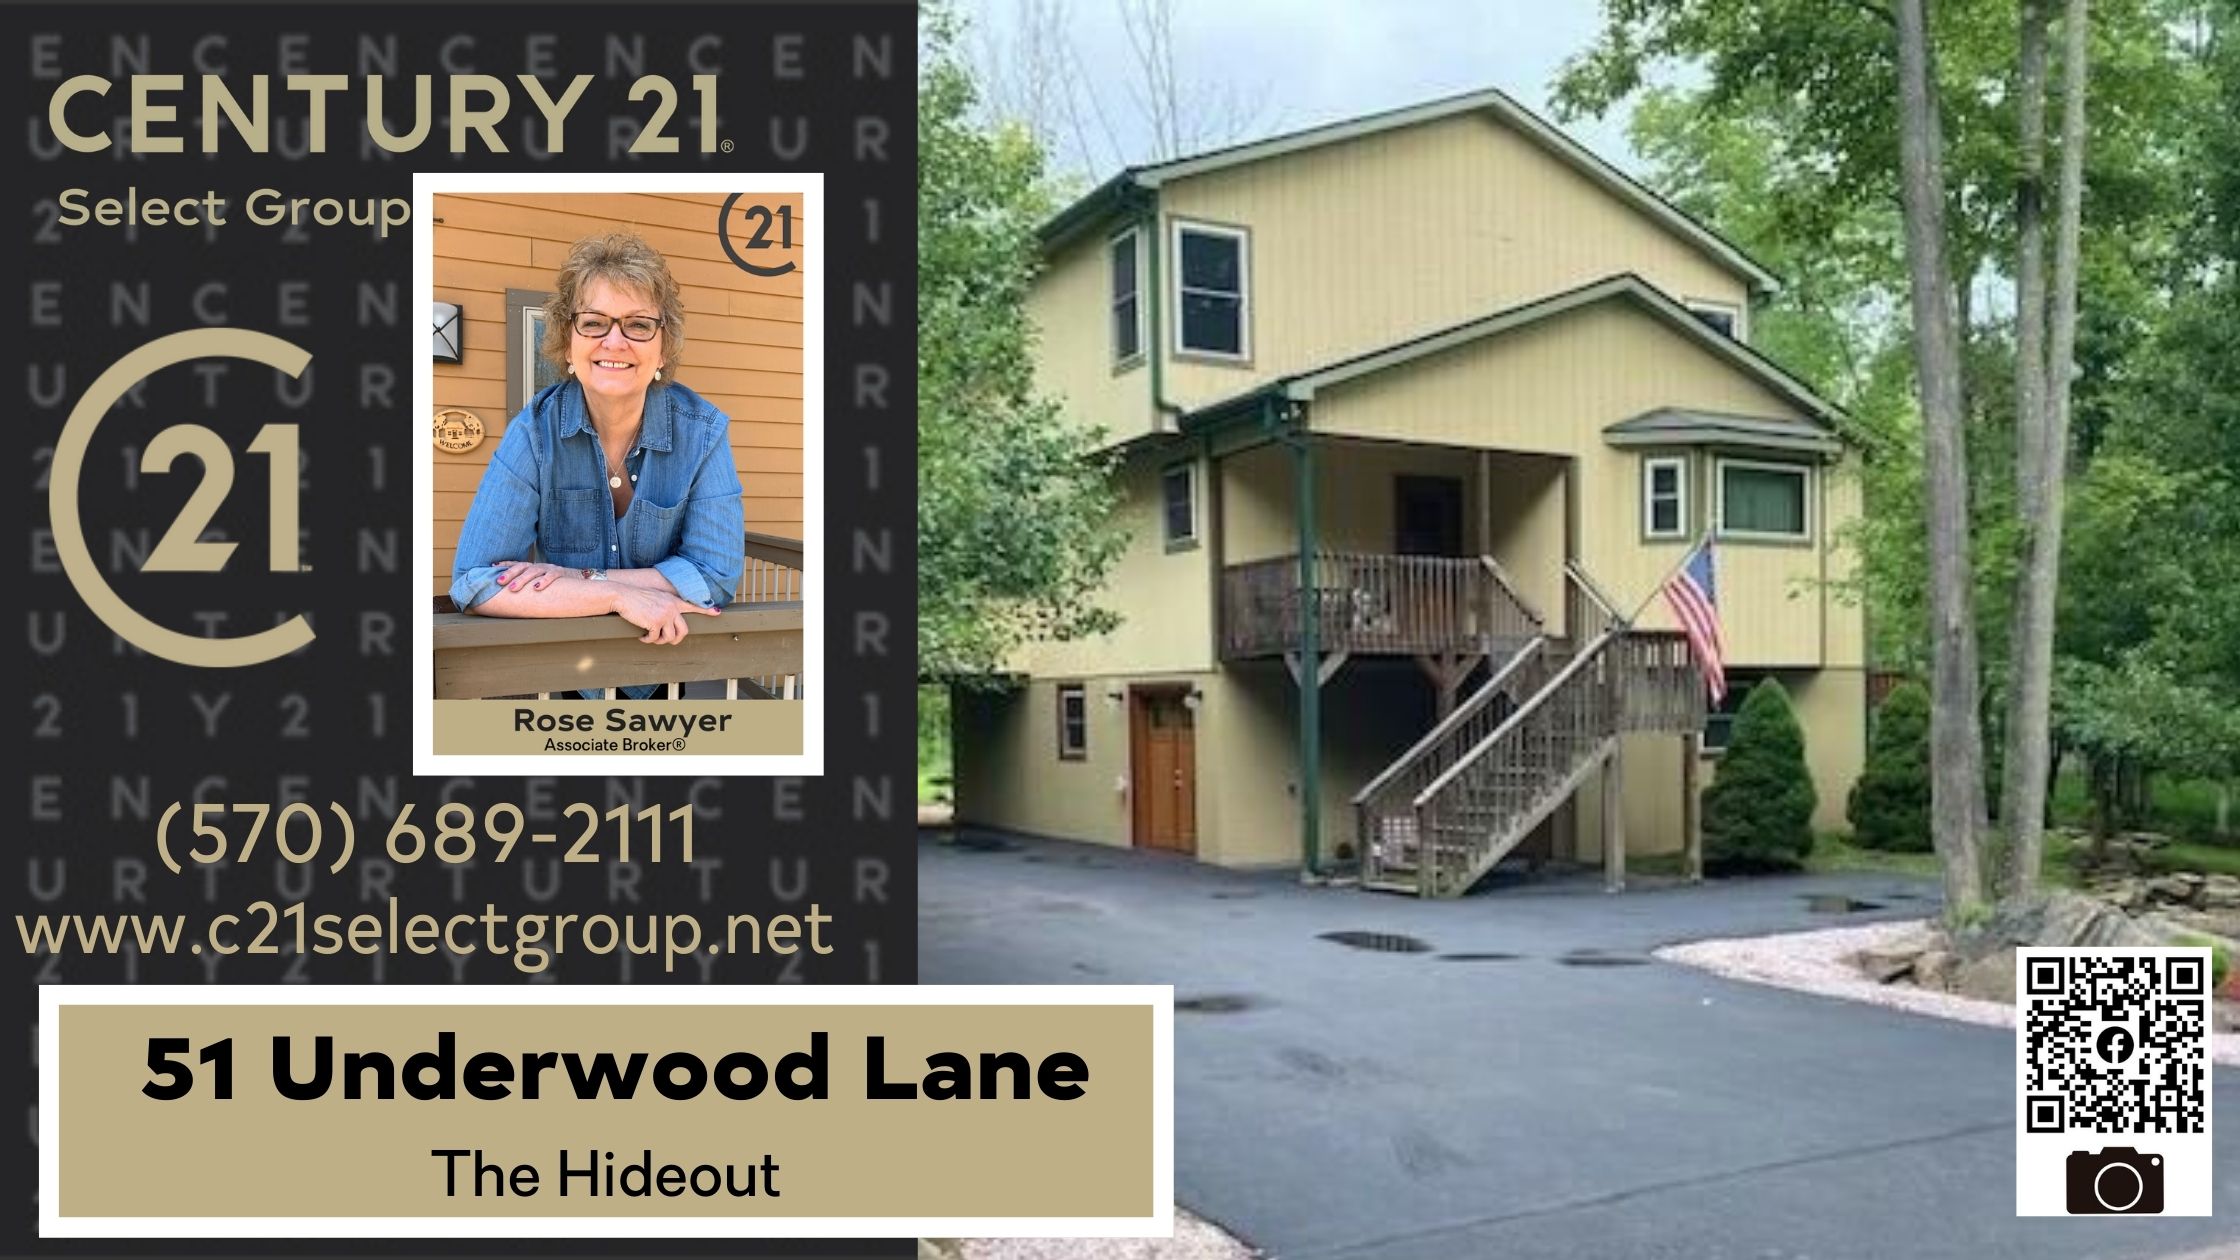 51 Underwood Lane: Spacious Open Floor Plan Hideout Community Home